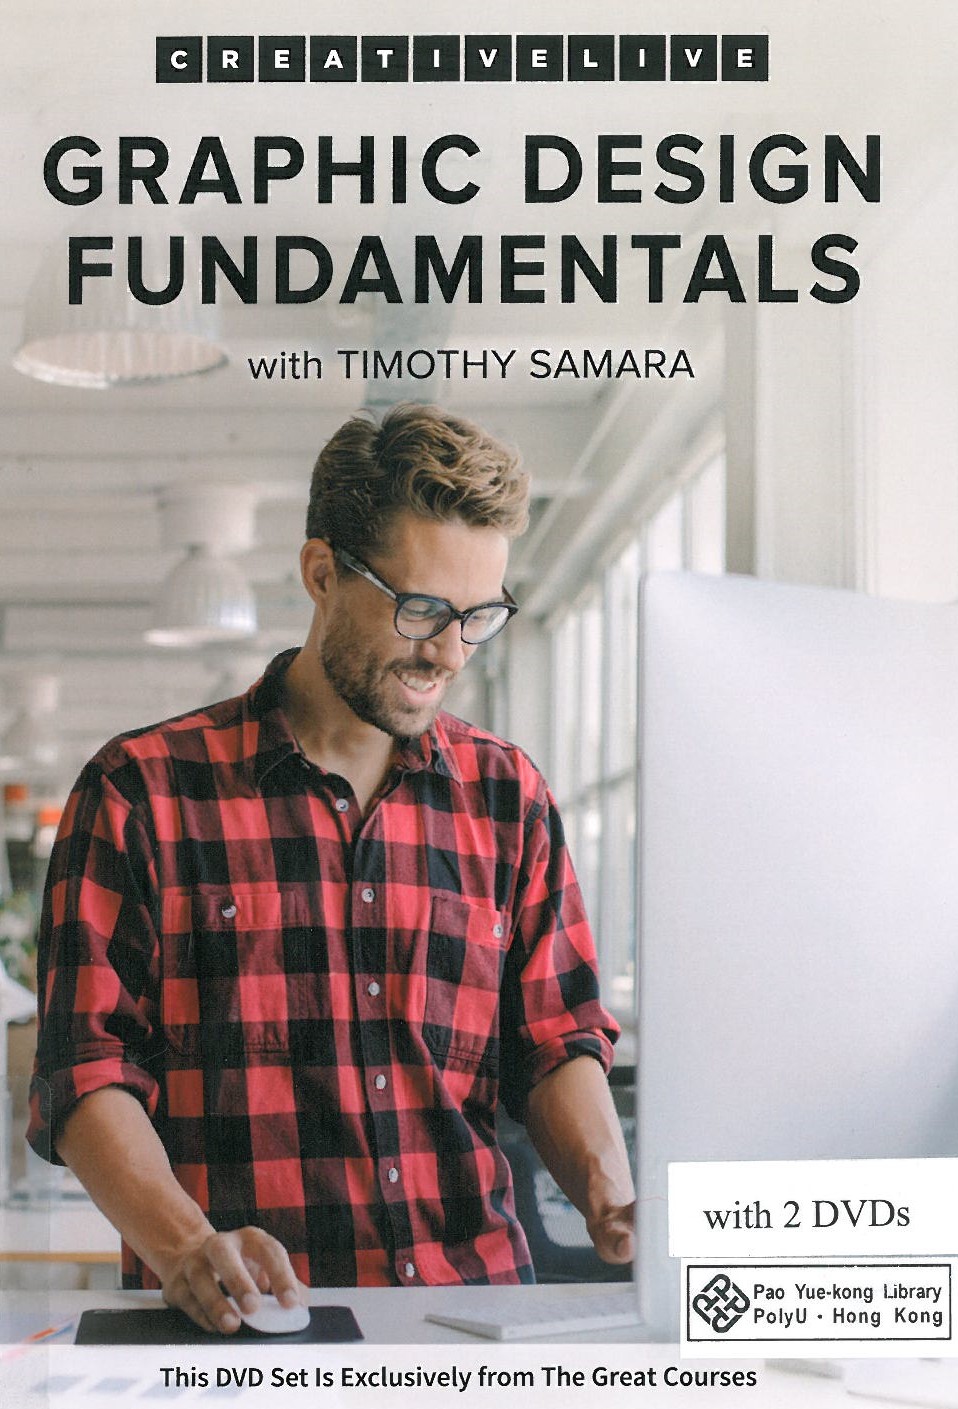 Graphic design fundamentals with Timothy Samara